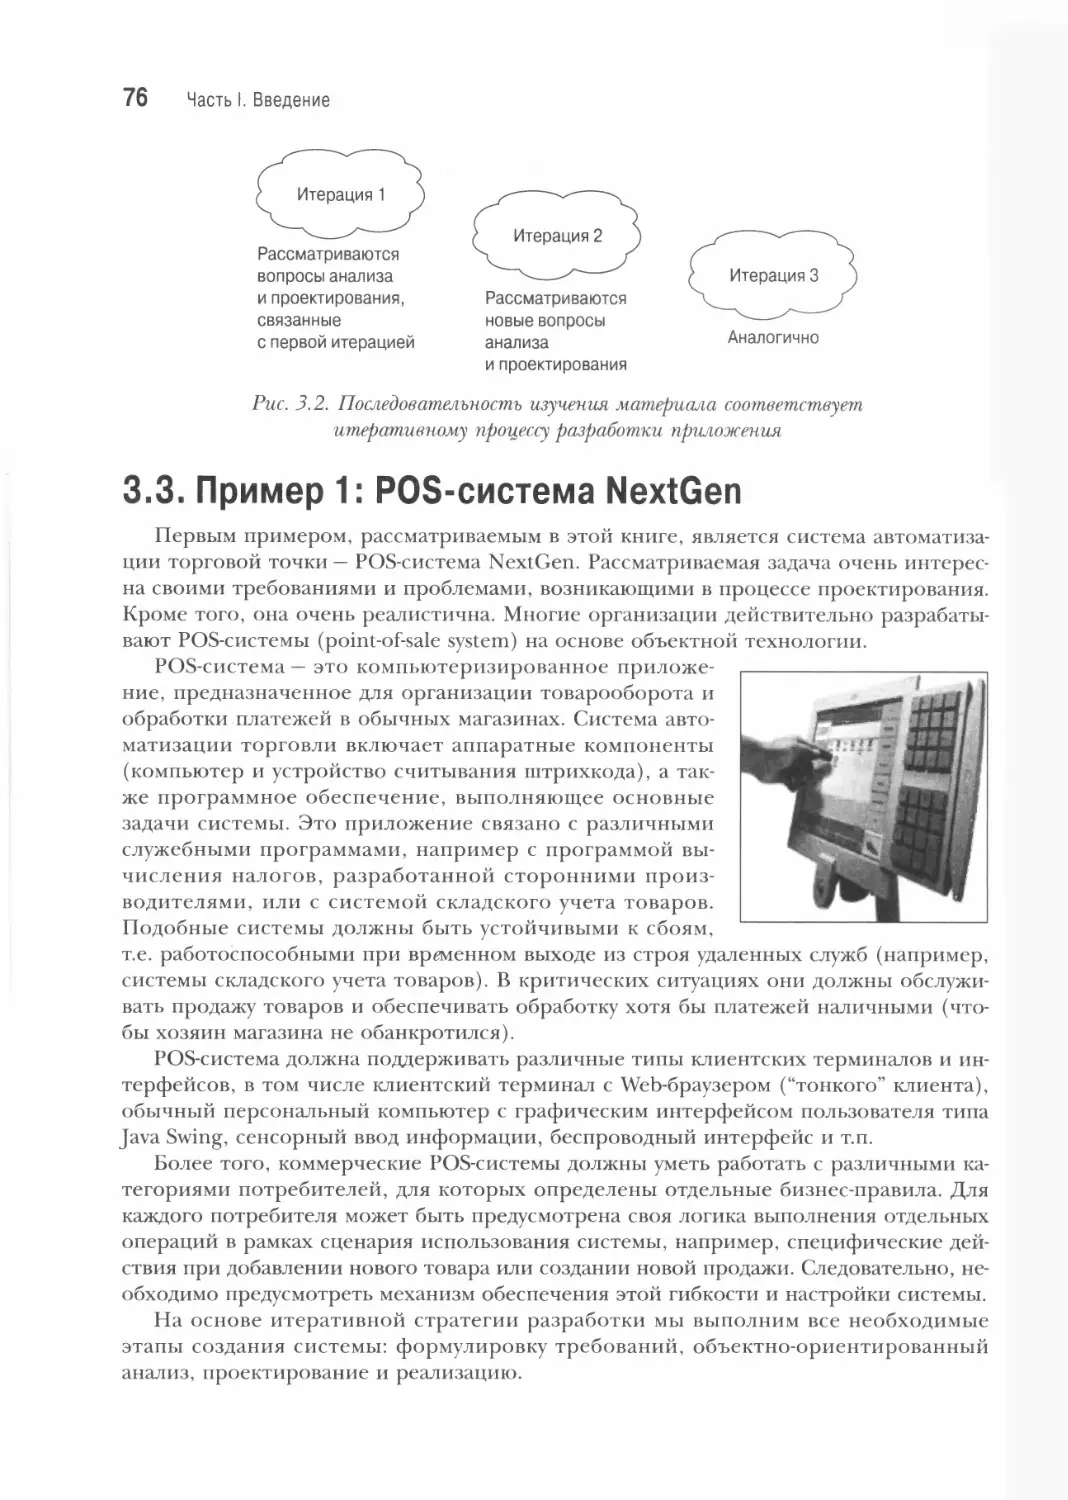 3.3. Пример 1: POS-система NextGen